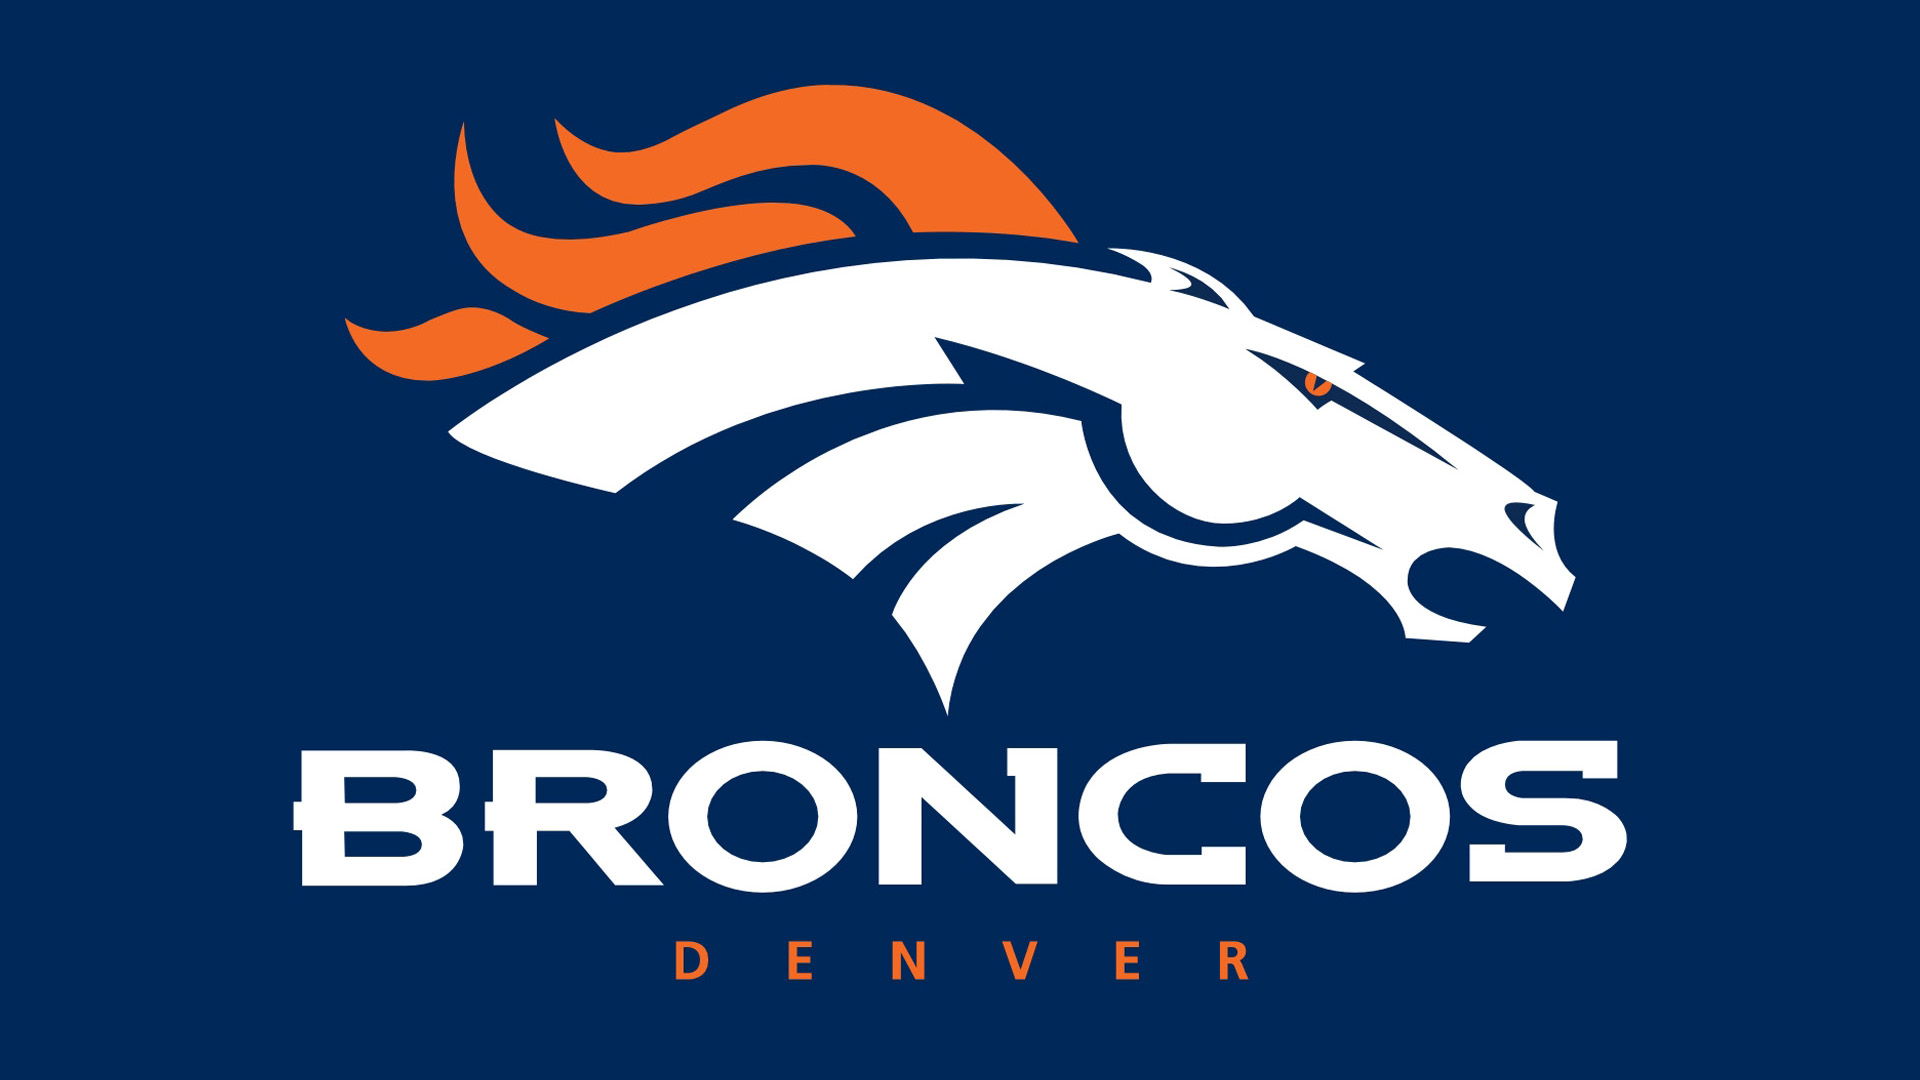 Denver Broncos Horse Logo 1920x1080 HD Image Sports NFL Football